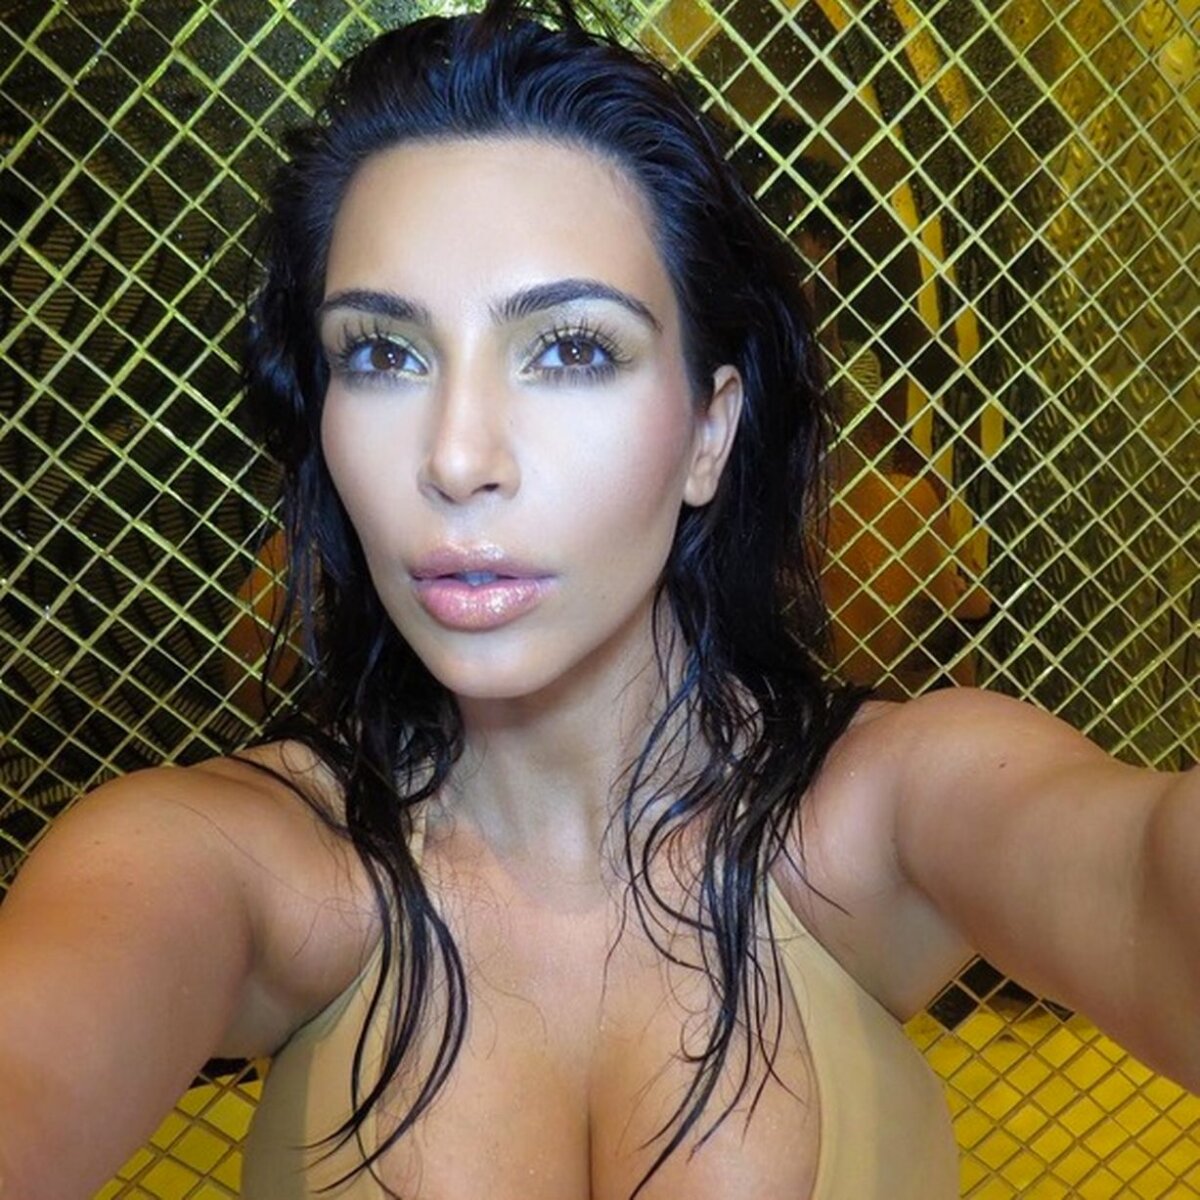 VIDEO&FOTO A făcut-o iar! Un nou sex tape cu Kim Kardashian a ajuns pe net